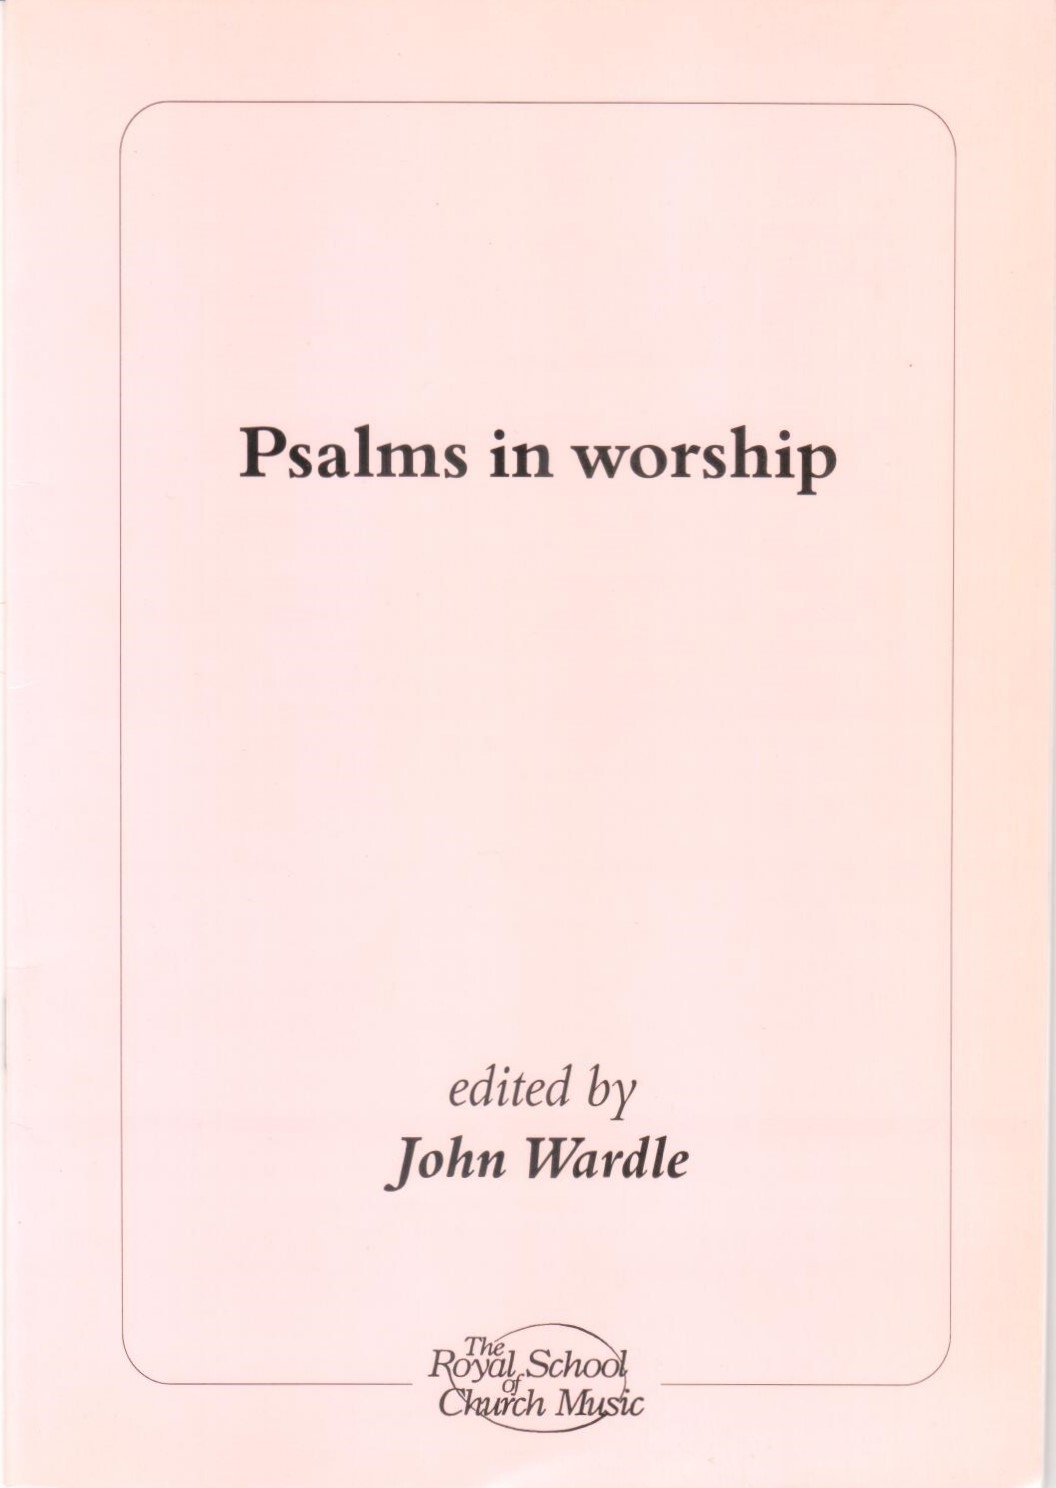 Psalms in worship